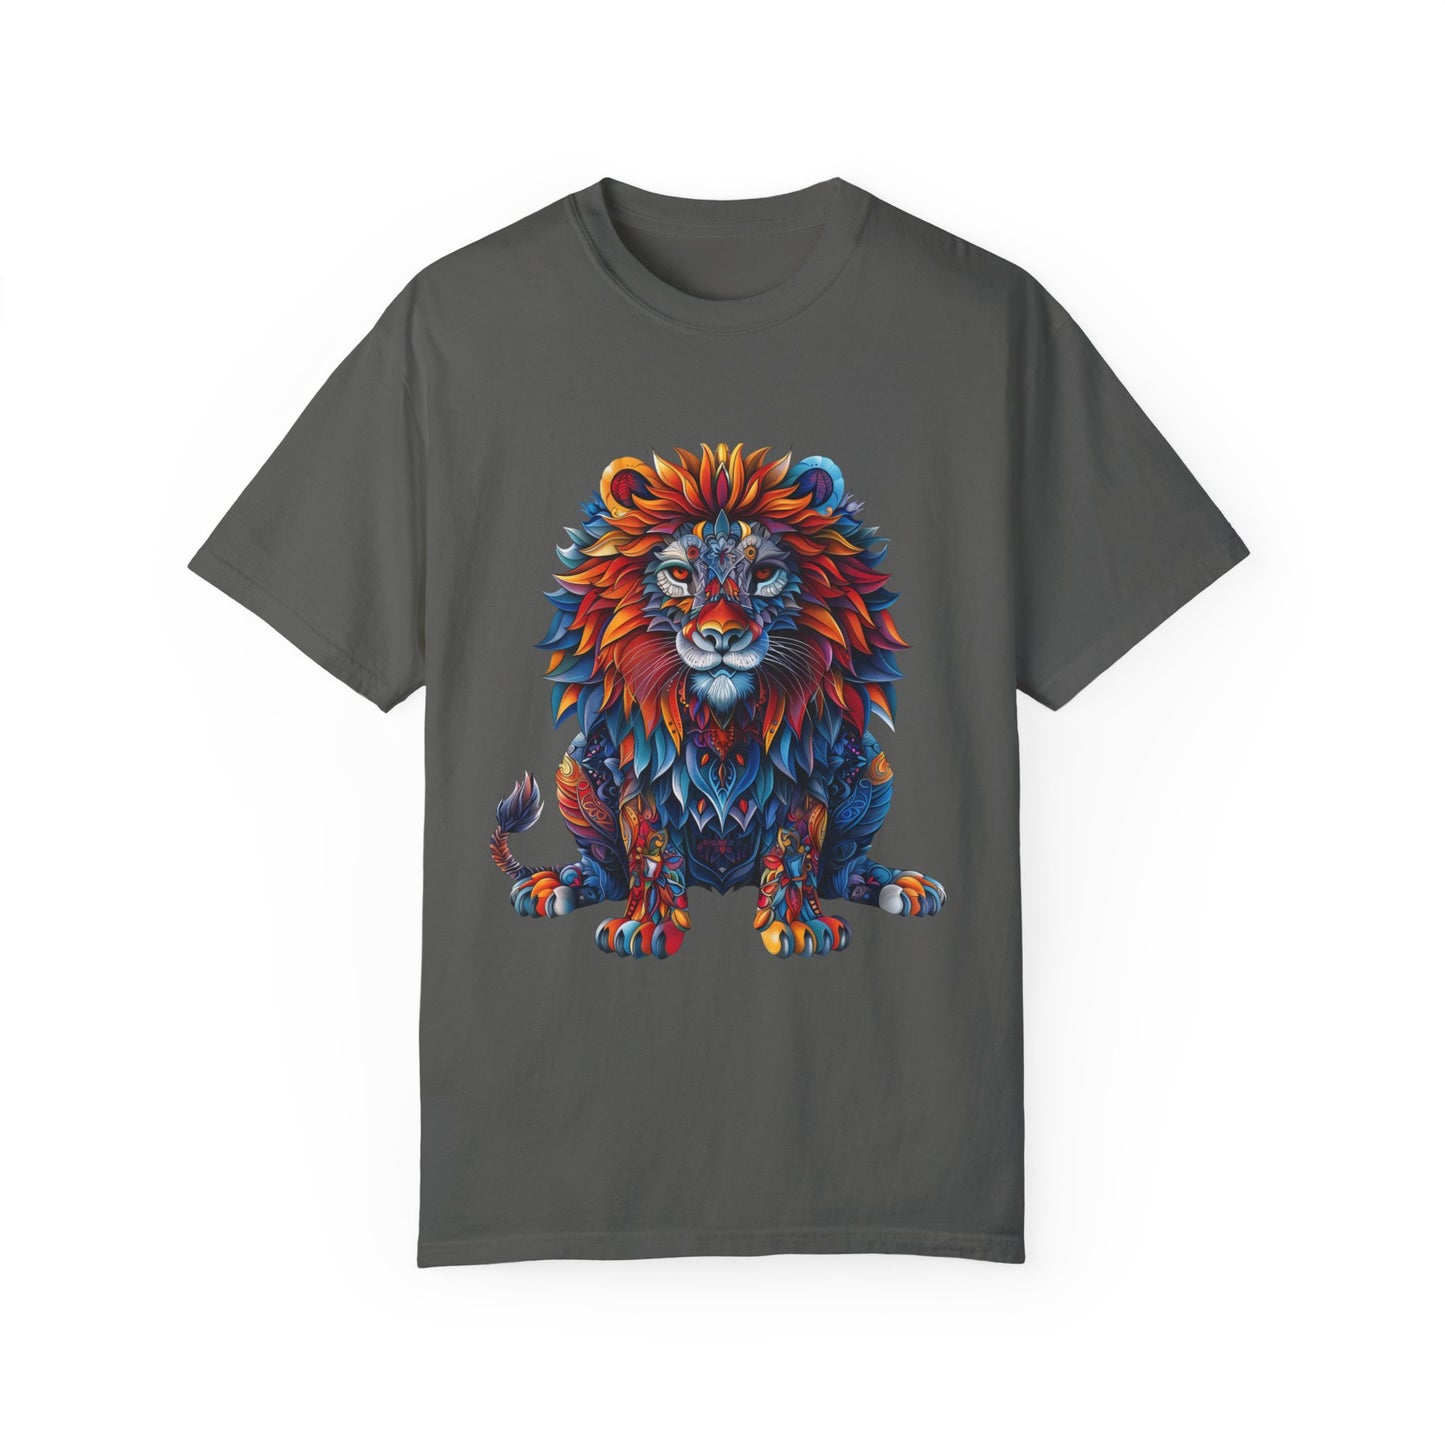 Lion Head Cool Graphic Design Novelty Unisex Garment-dyed T-shirt Cotton Funny Humorous Graphic Soft Premium Unisex Men Women Pepper T-shirt Birthday Gift-12